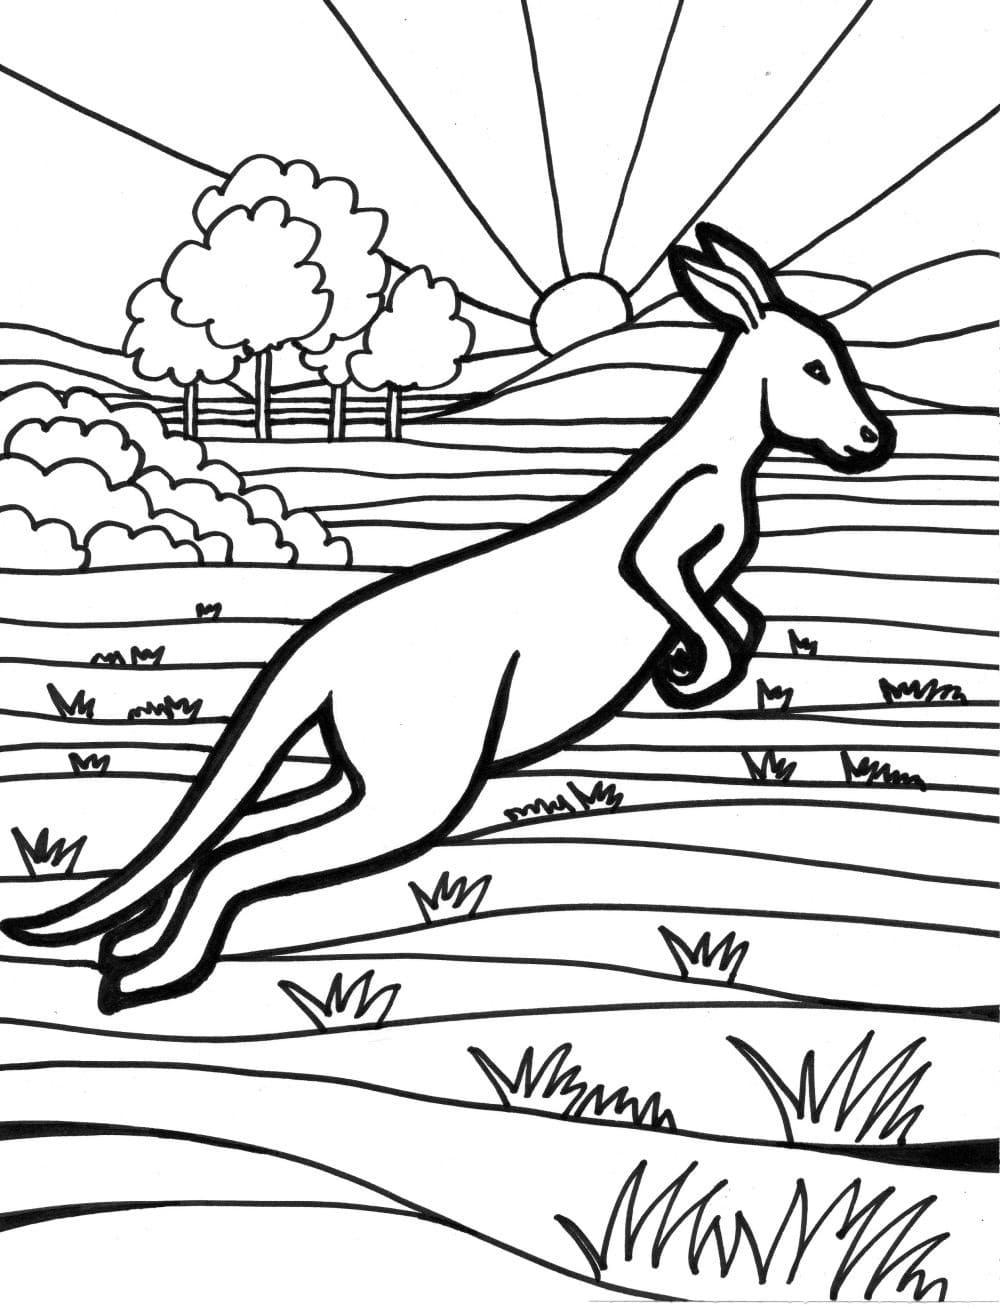 Målarbild Hoppande Känguru